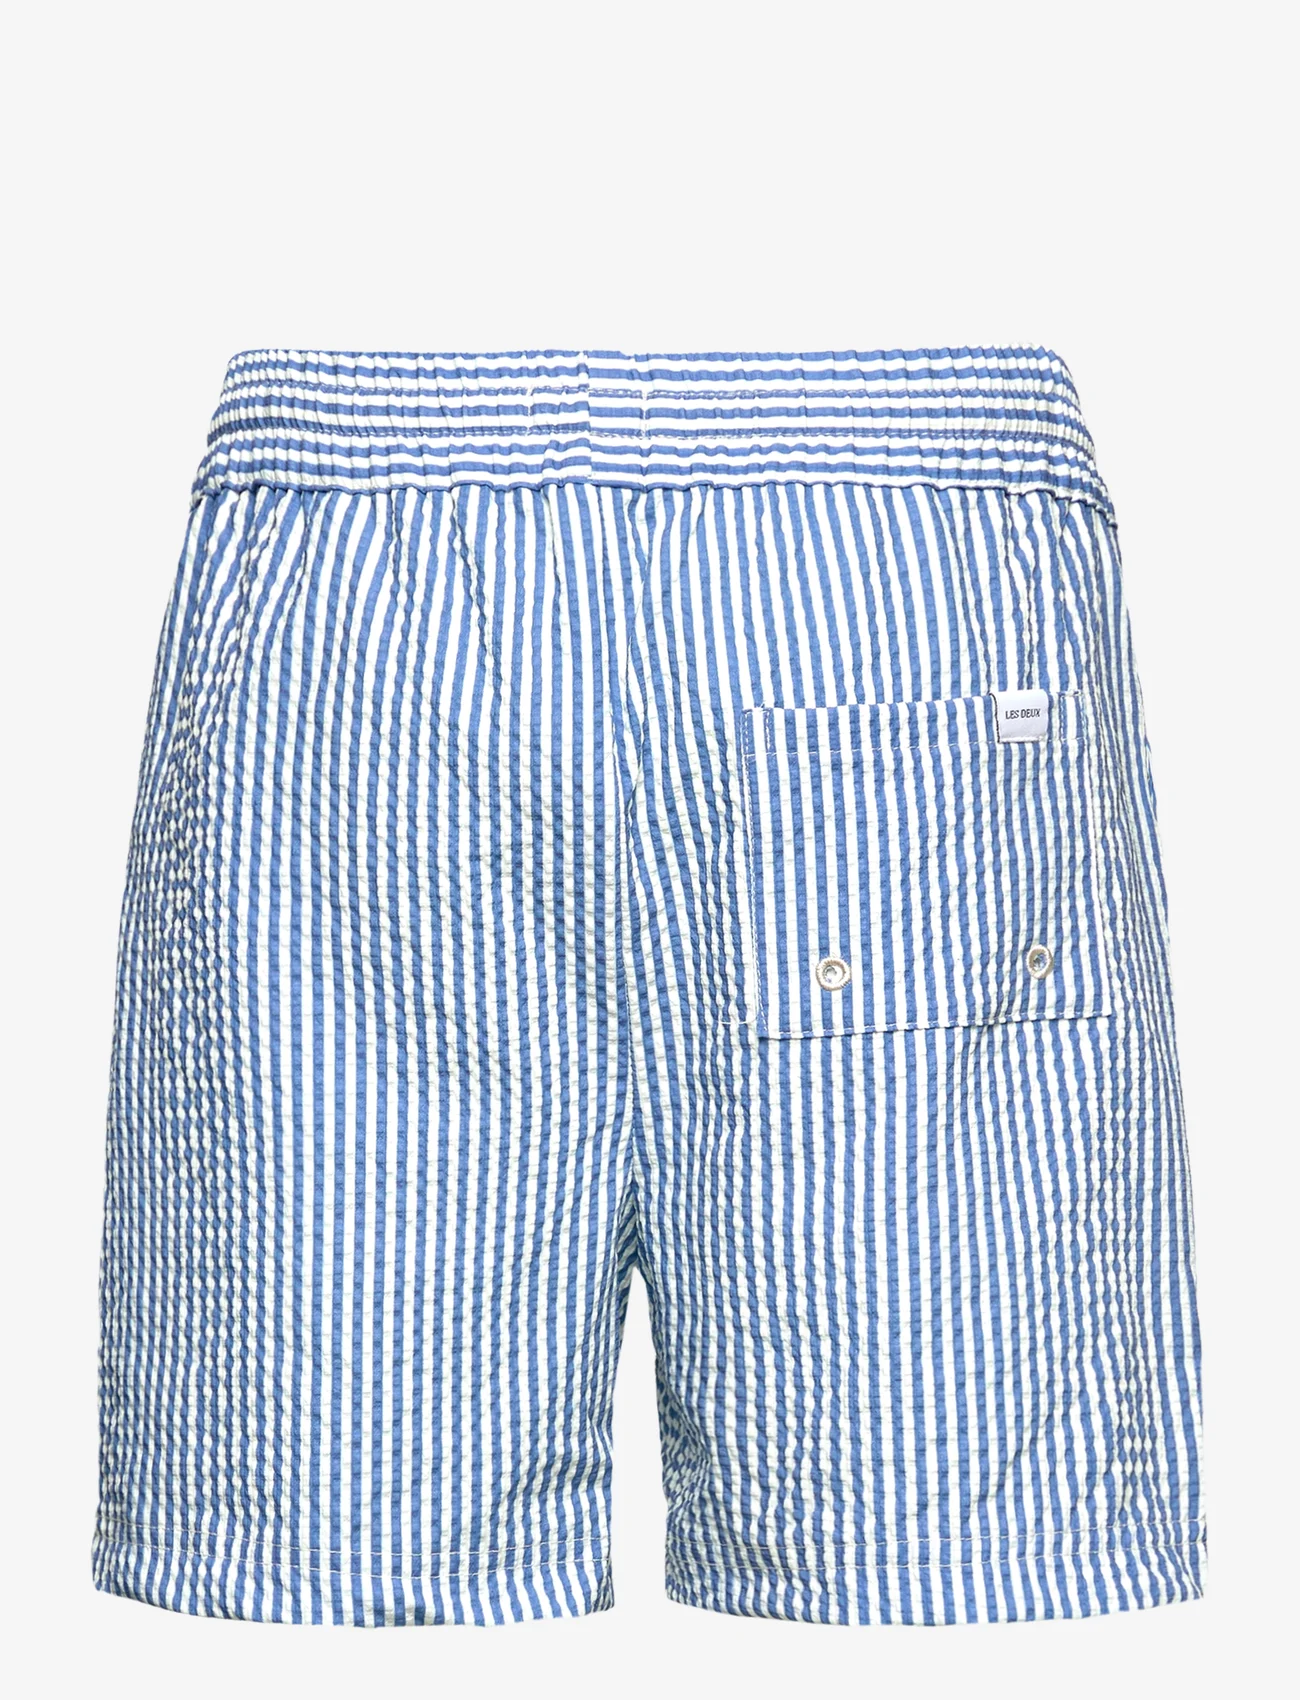 Les Deux - Stan Stripe Seersucker Swim Shorts - maudymosi šortai - washed denim blue/light ivory - 1